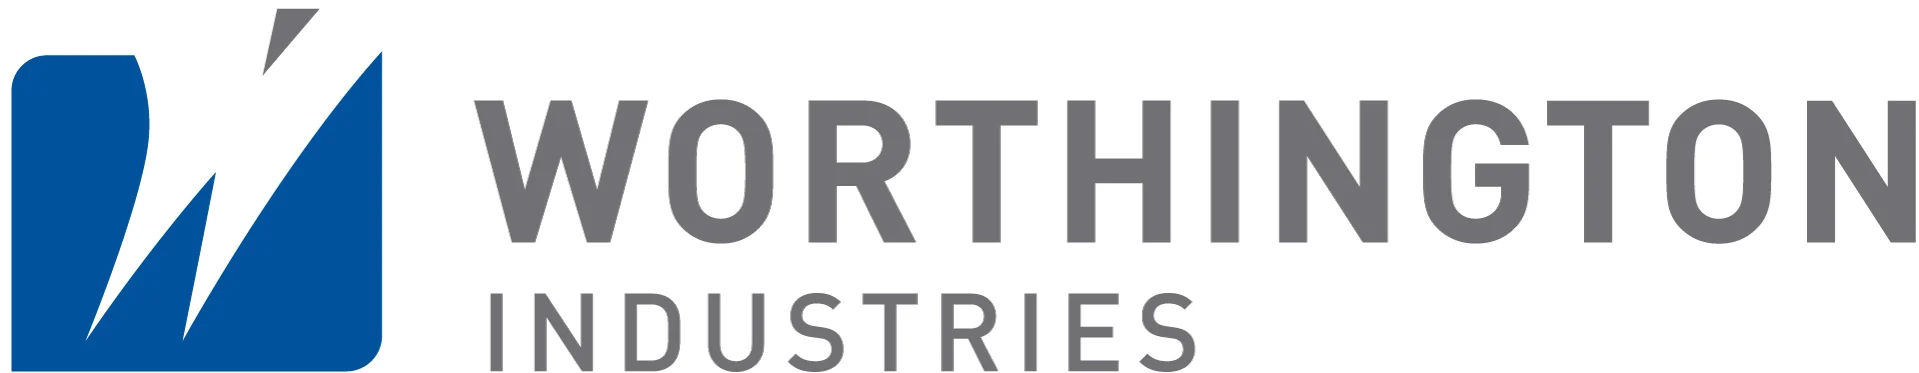 Worthington Industries Logo Full Color